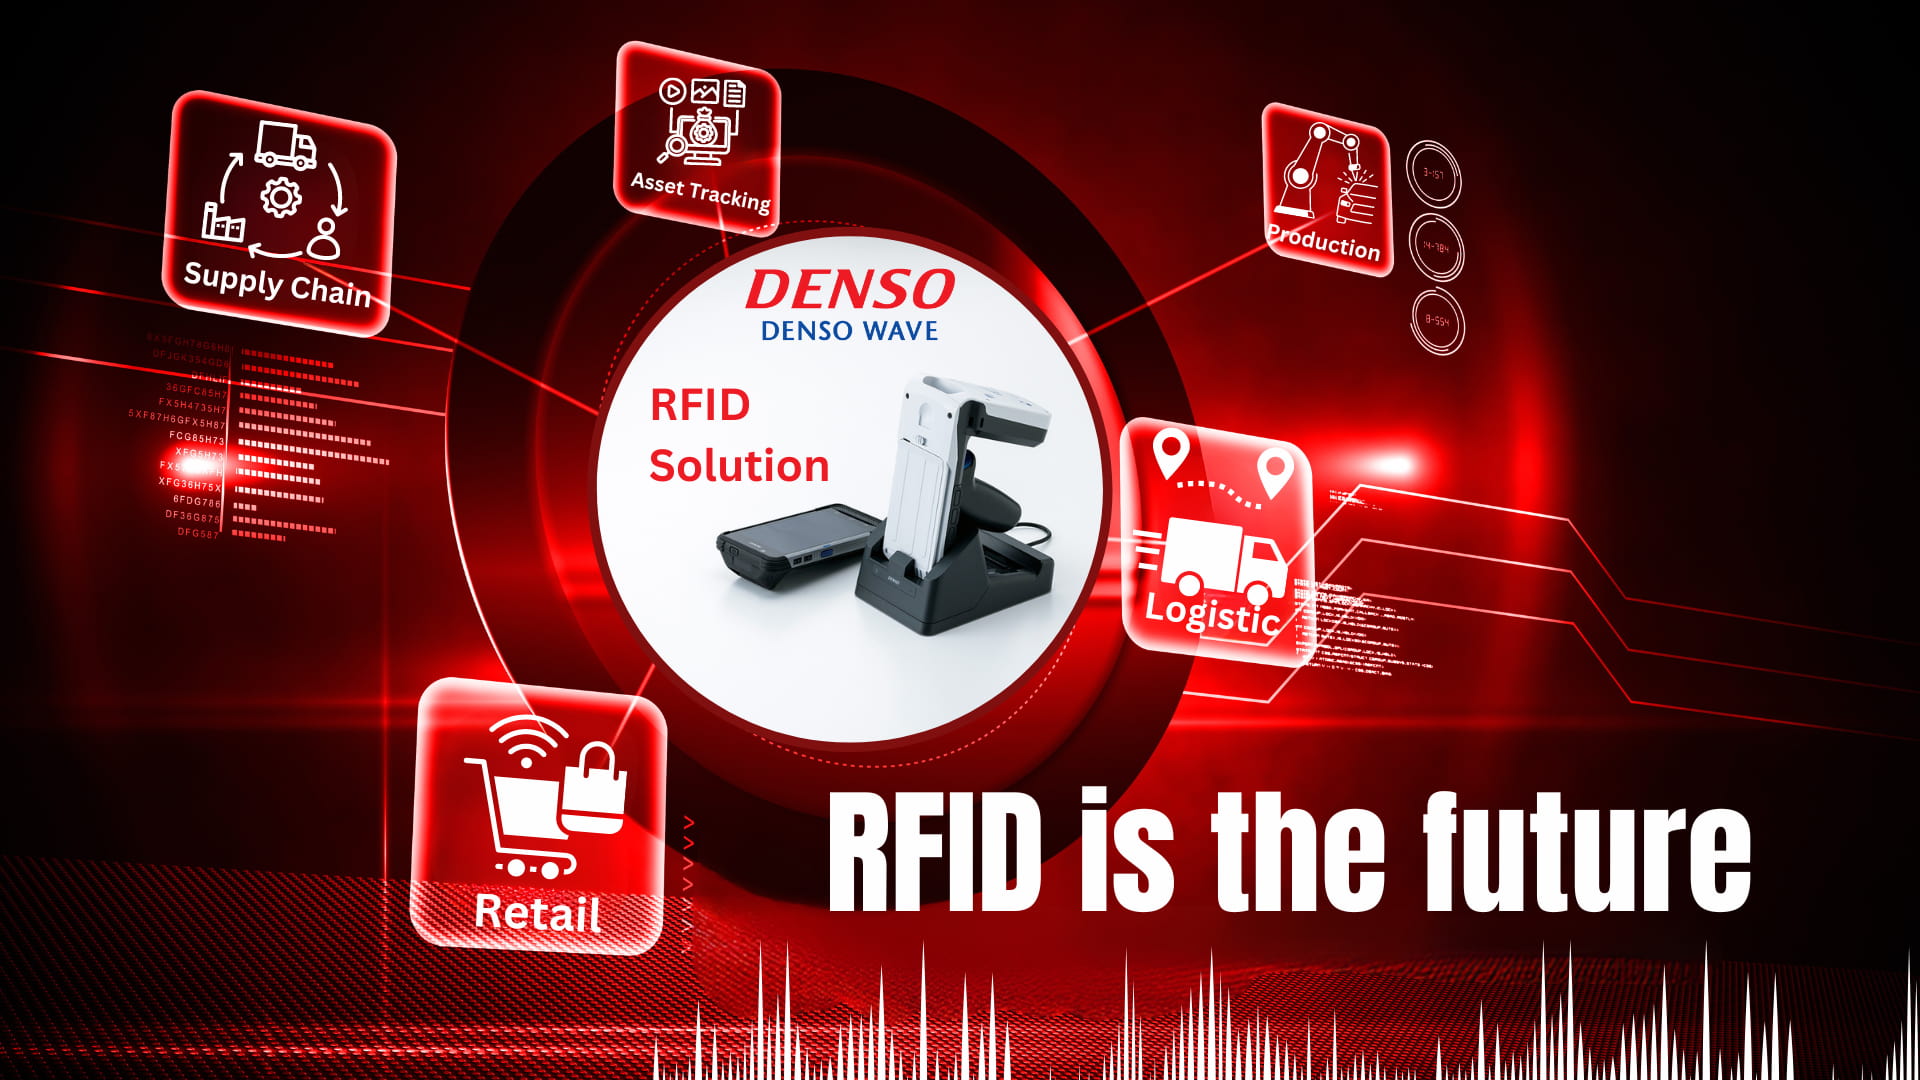 RFID is the future